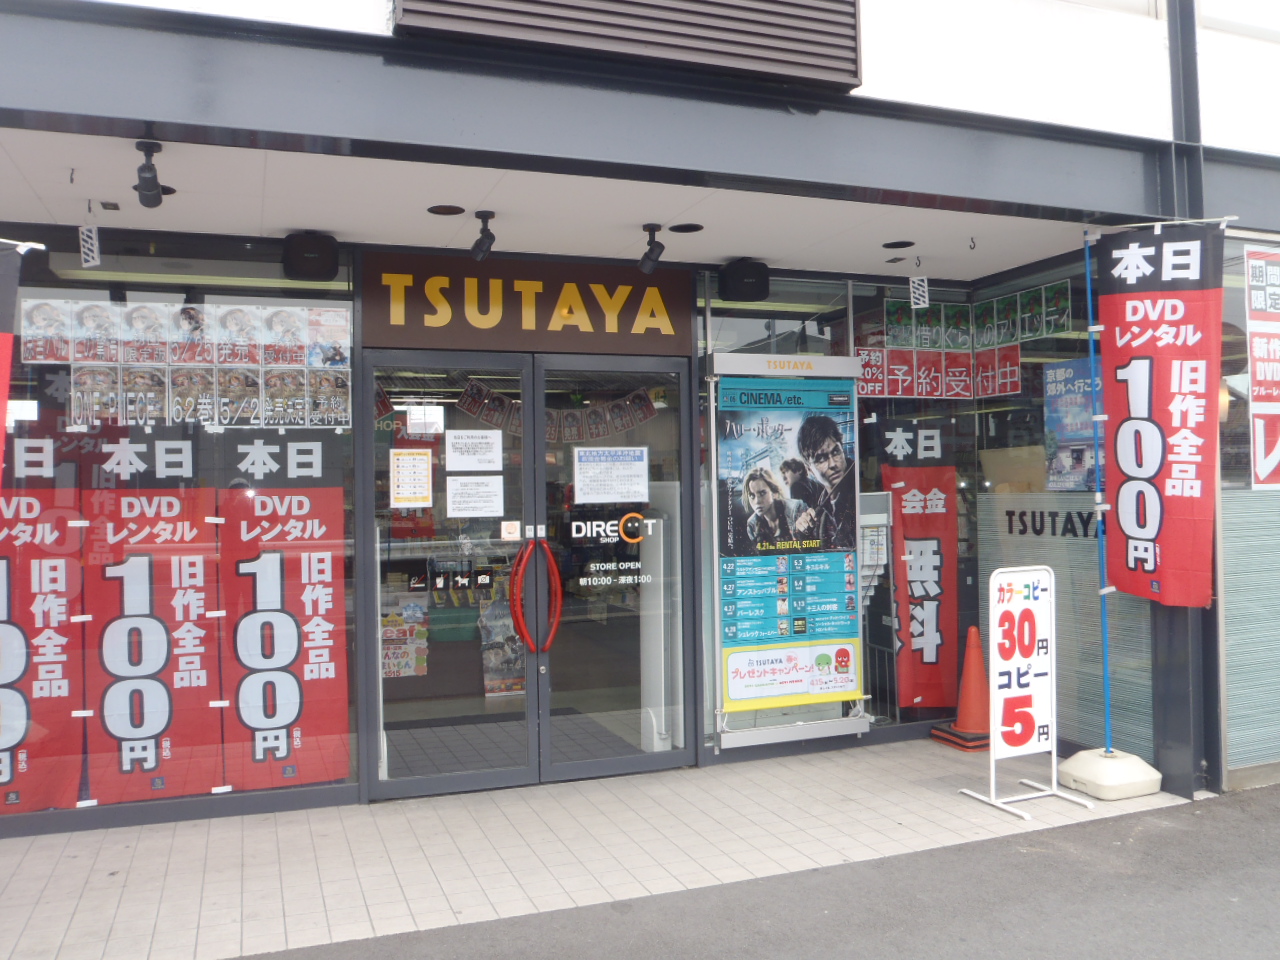 Rental video. TSUTAYA Tsutaya Kodo shop 2300m up (video rental)